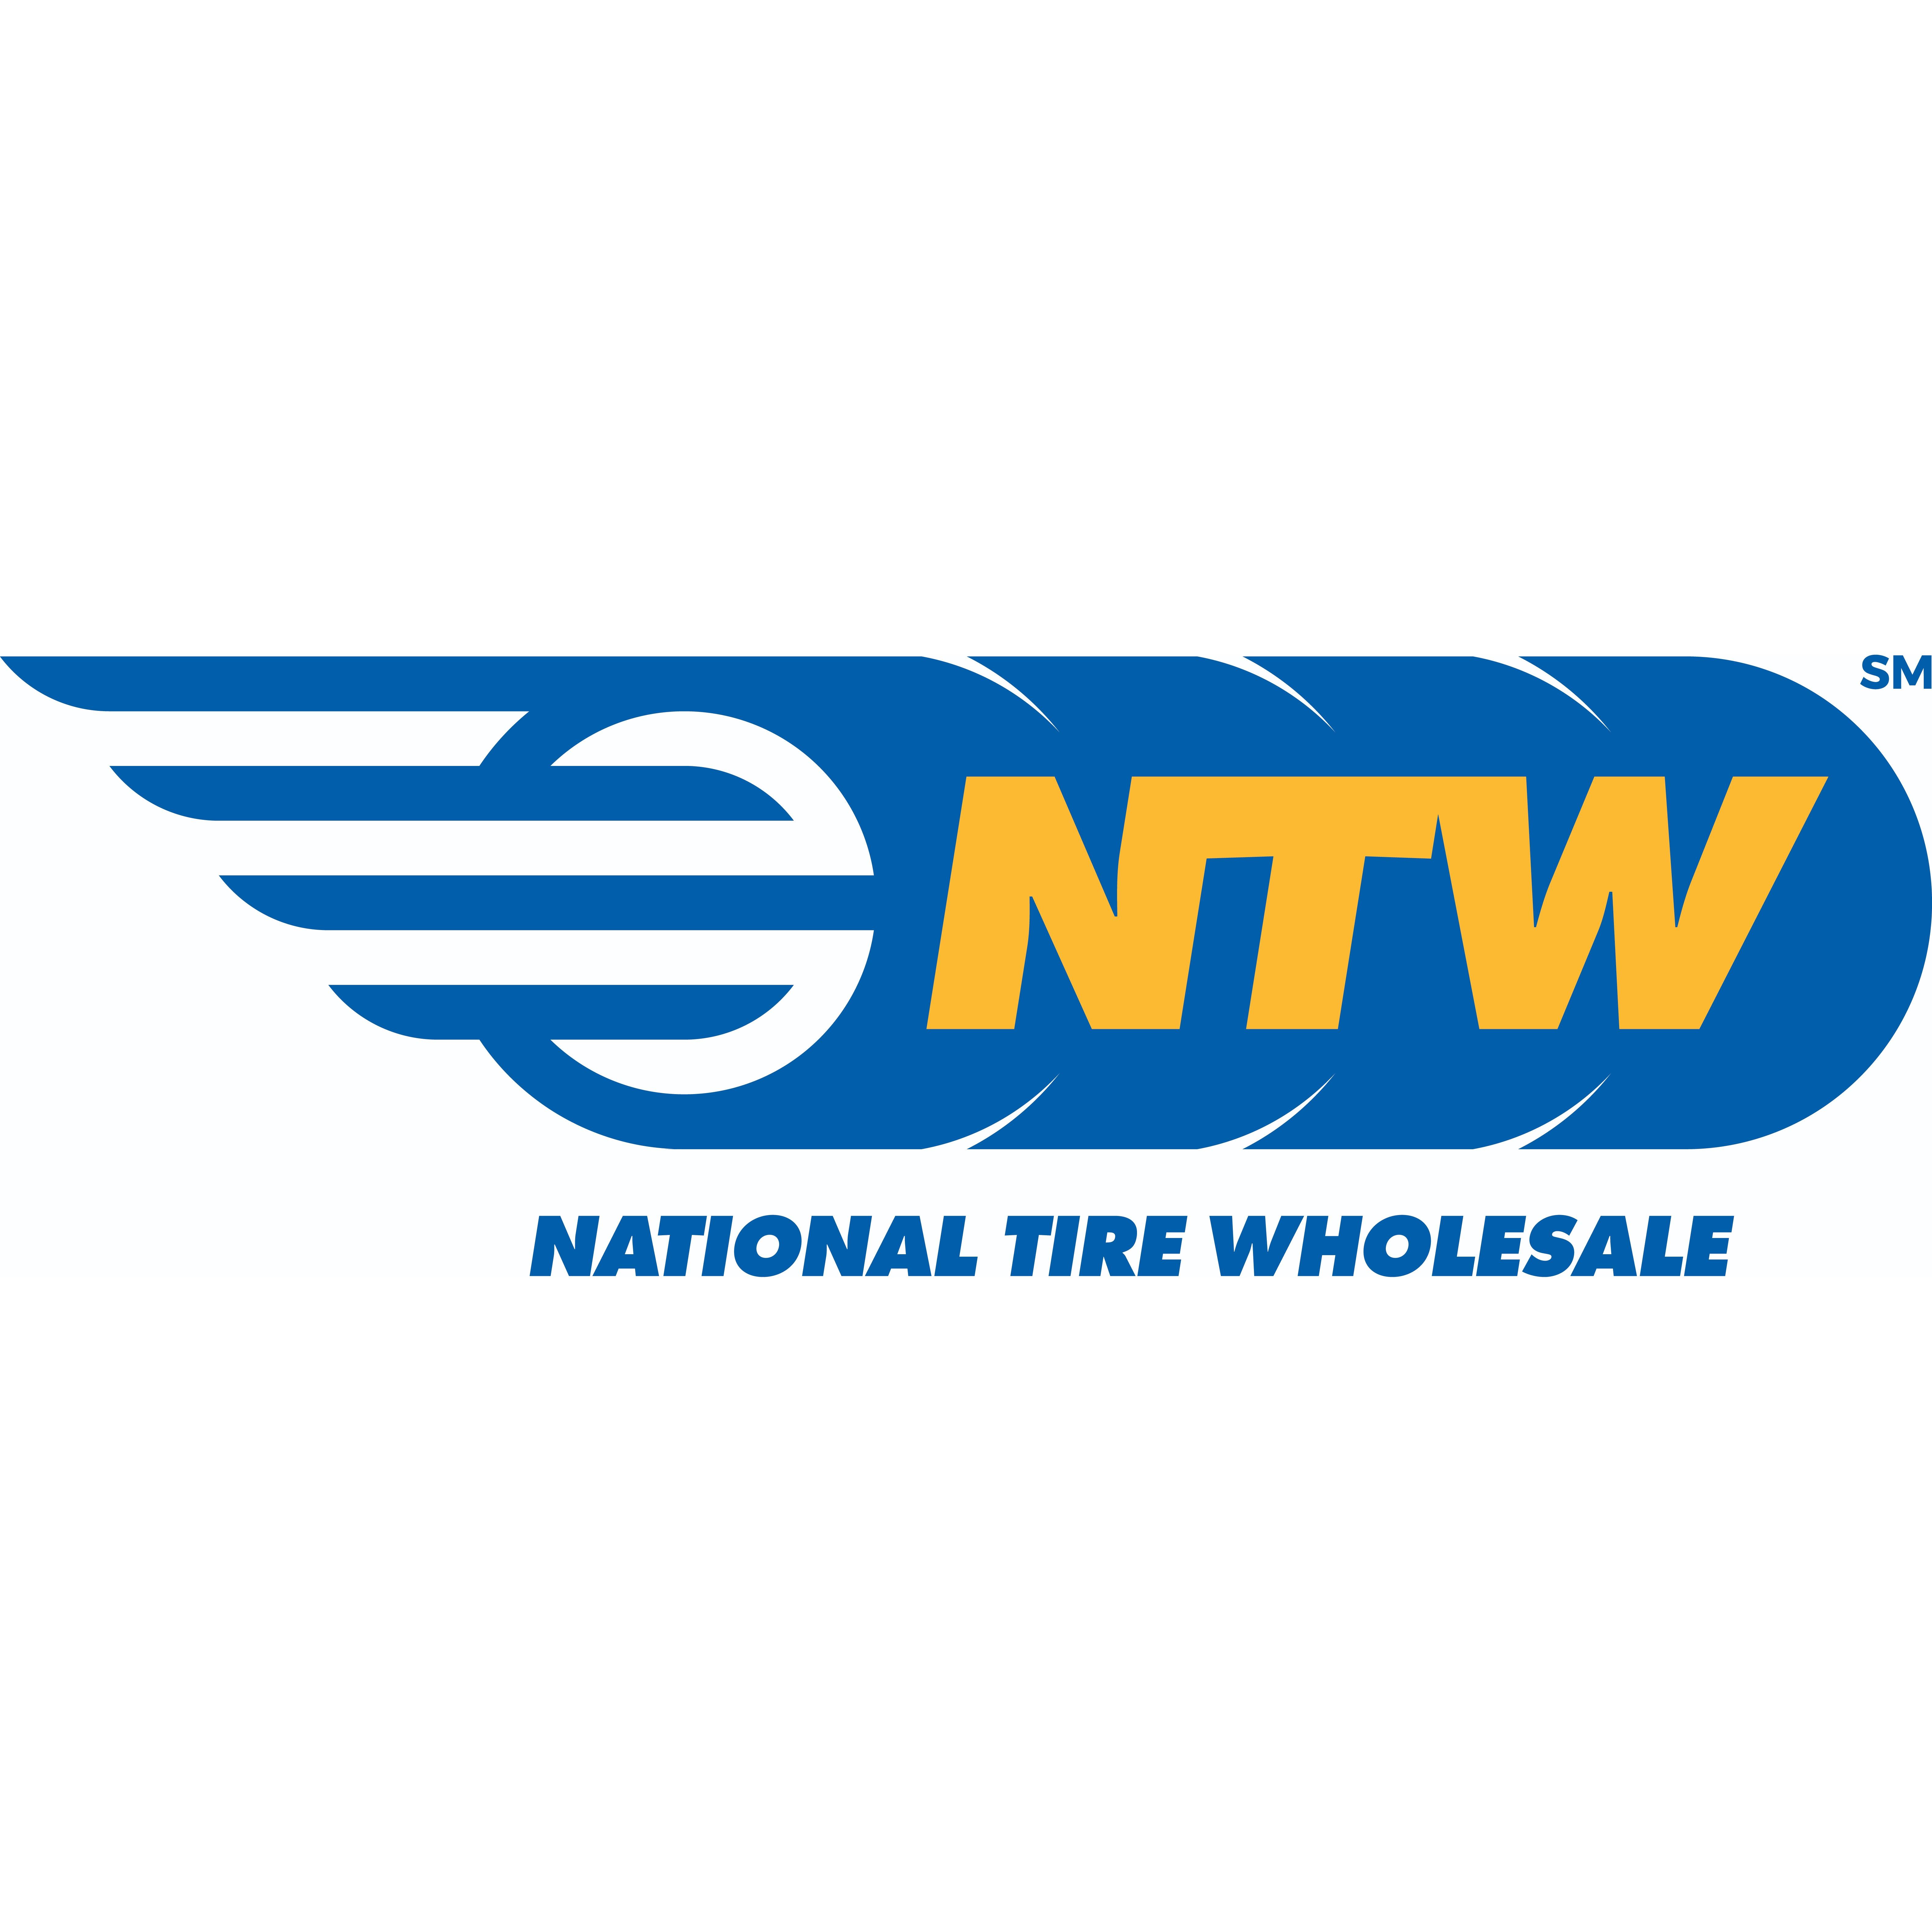 NTW - National Tire Wholesale Photo